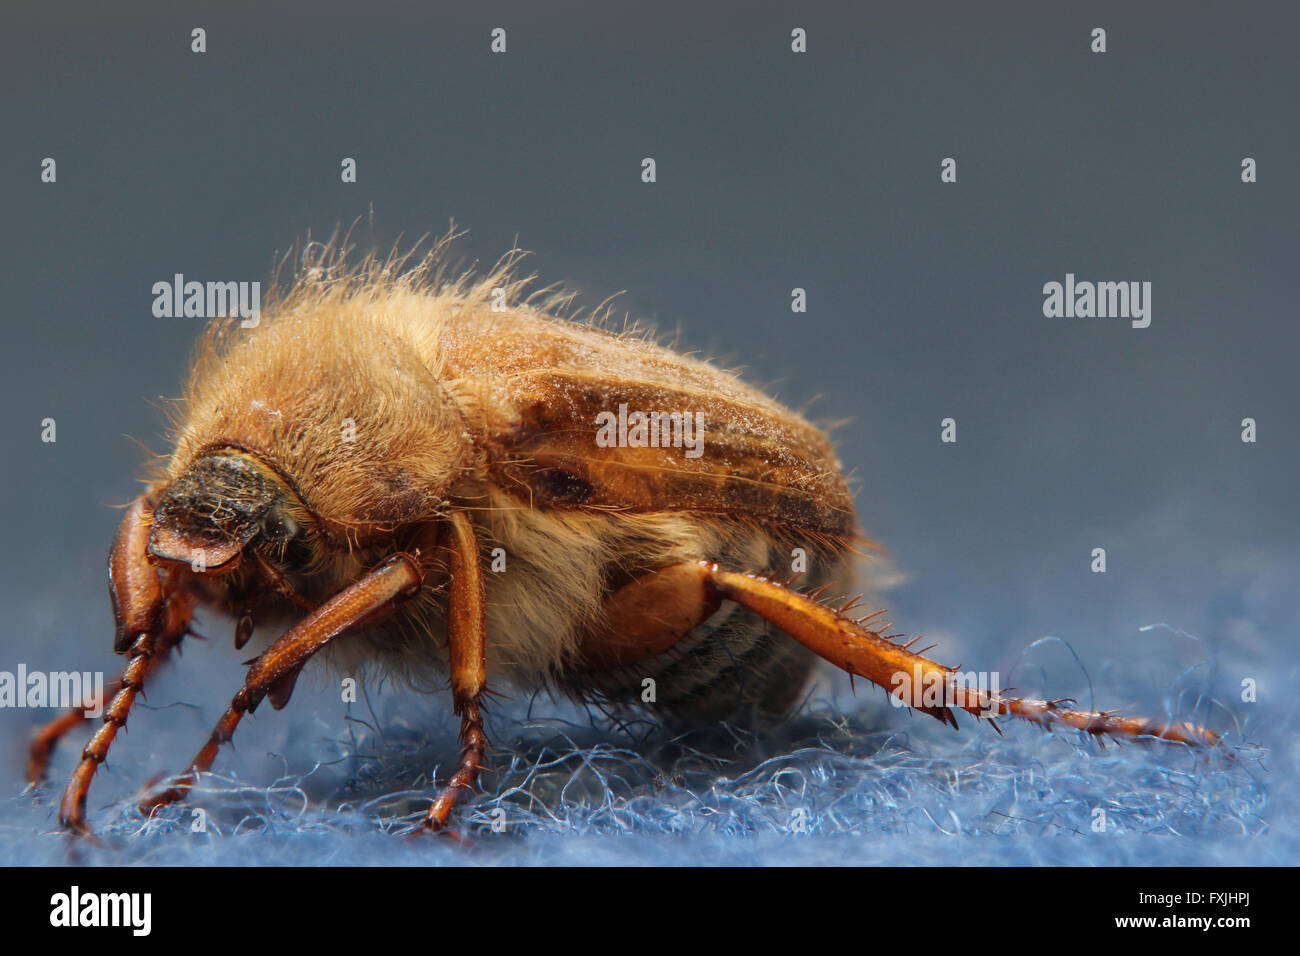 European june beetle (Amphimallon solstitiale) sitting on carpet. Stock Photo